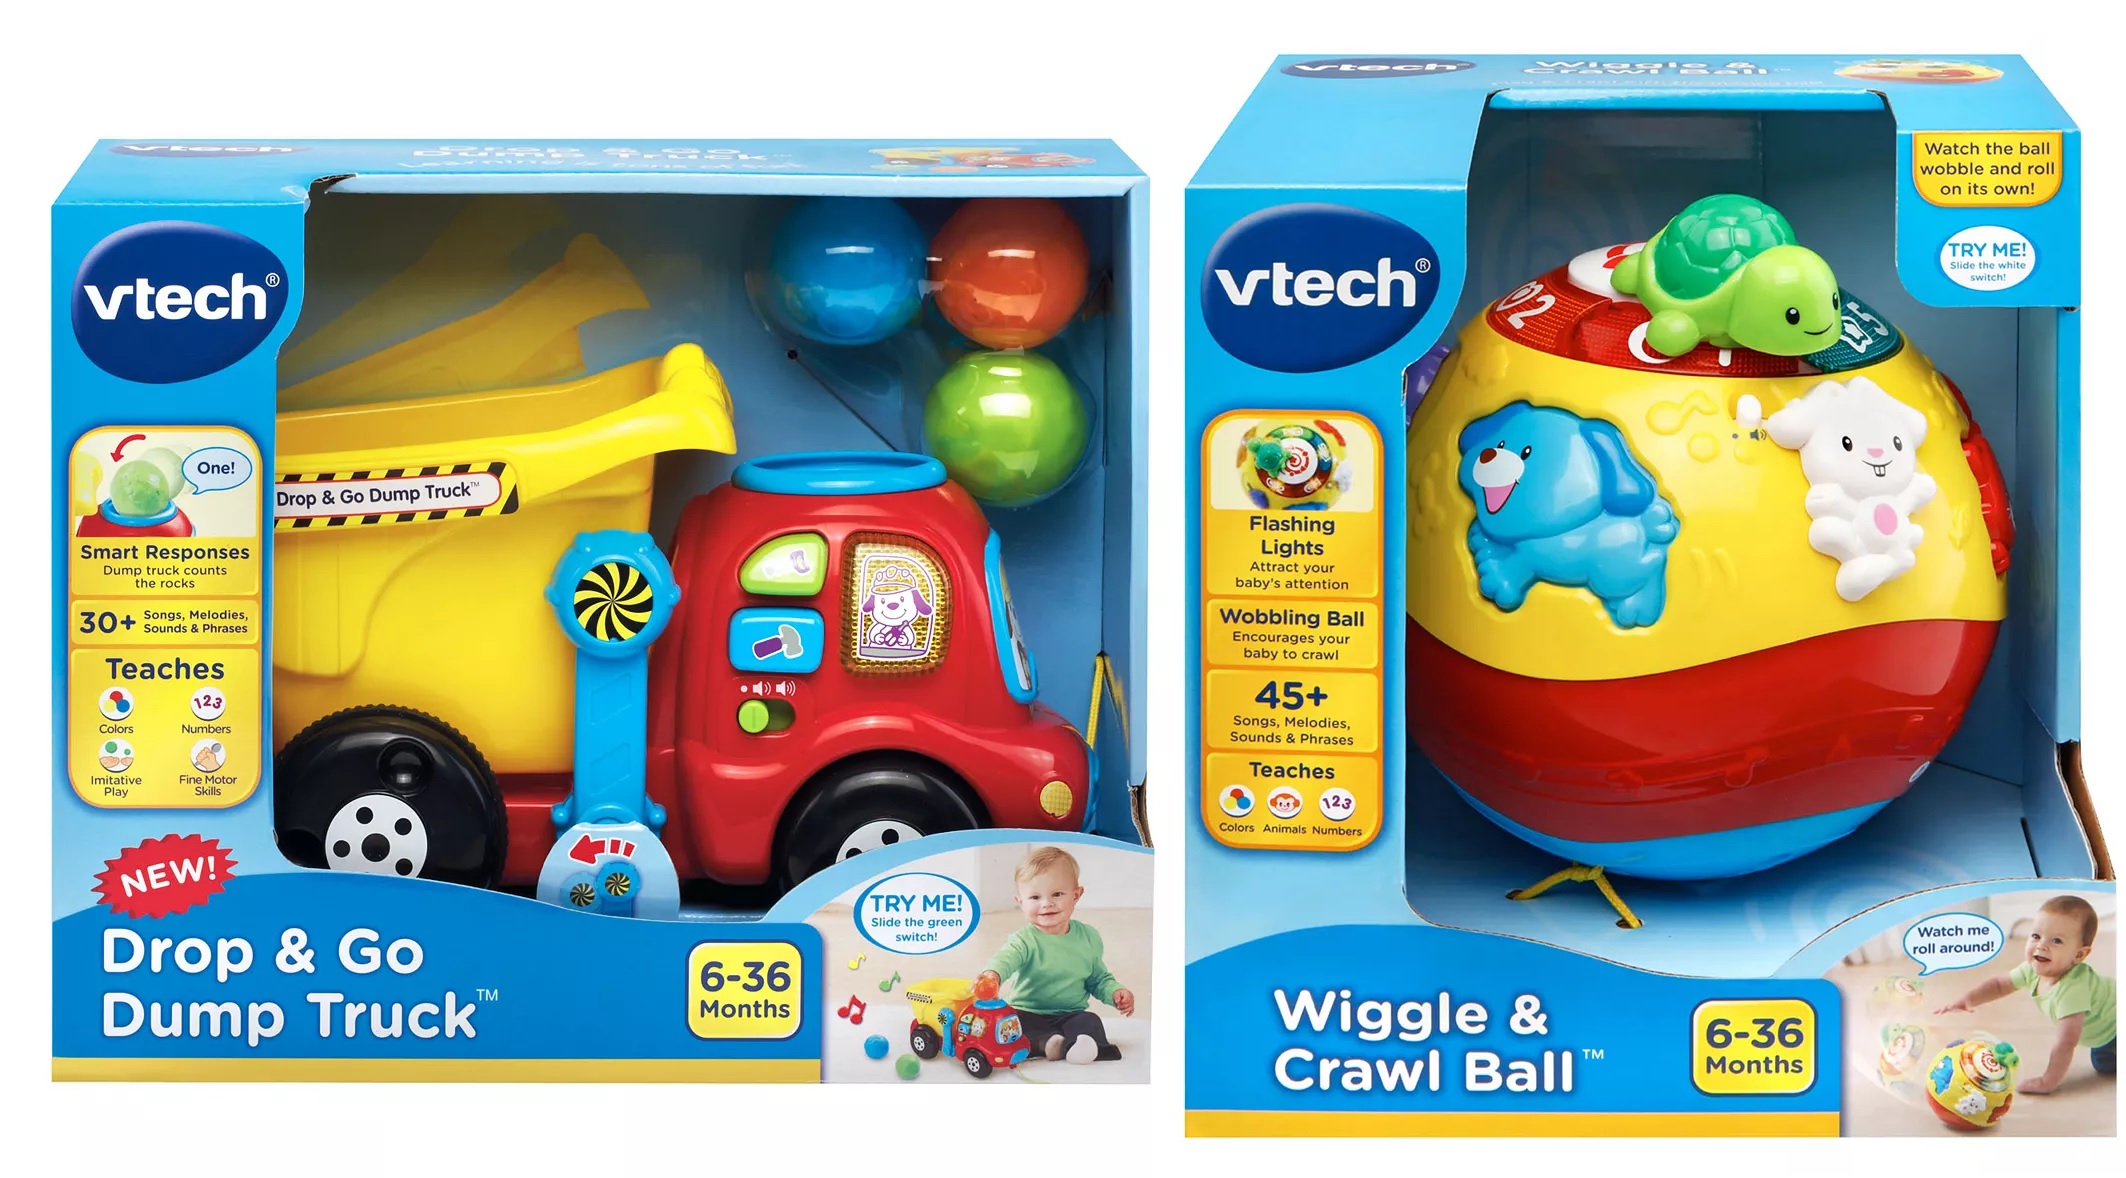 vtech wiggle & crawl ball toy